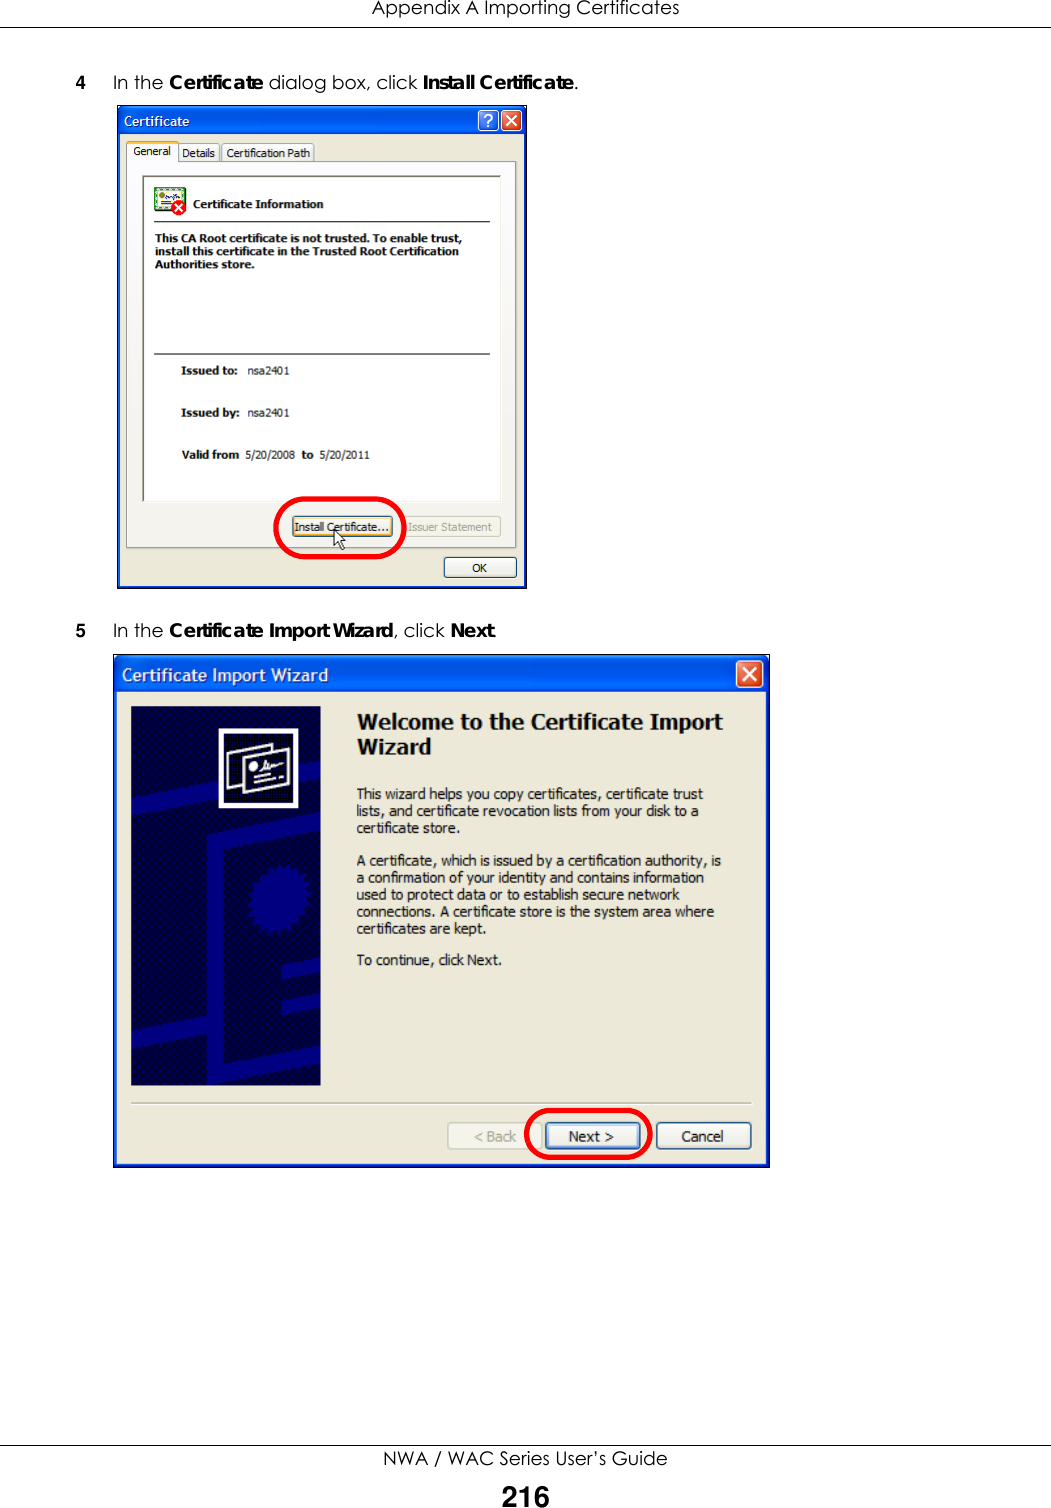 Appendix A Importing CertificatesNWA / WAC Series User’s Guide2164In the Certificate dialog box, click Install Certificate.5In the Certificate Import Wizard, click Next.